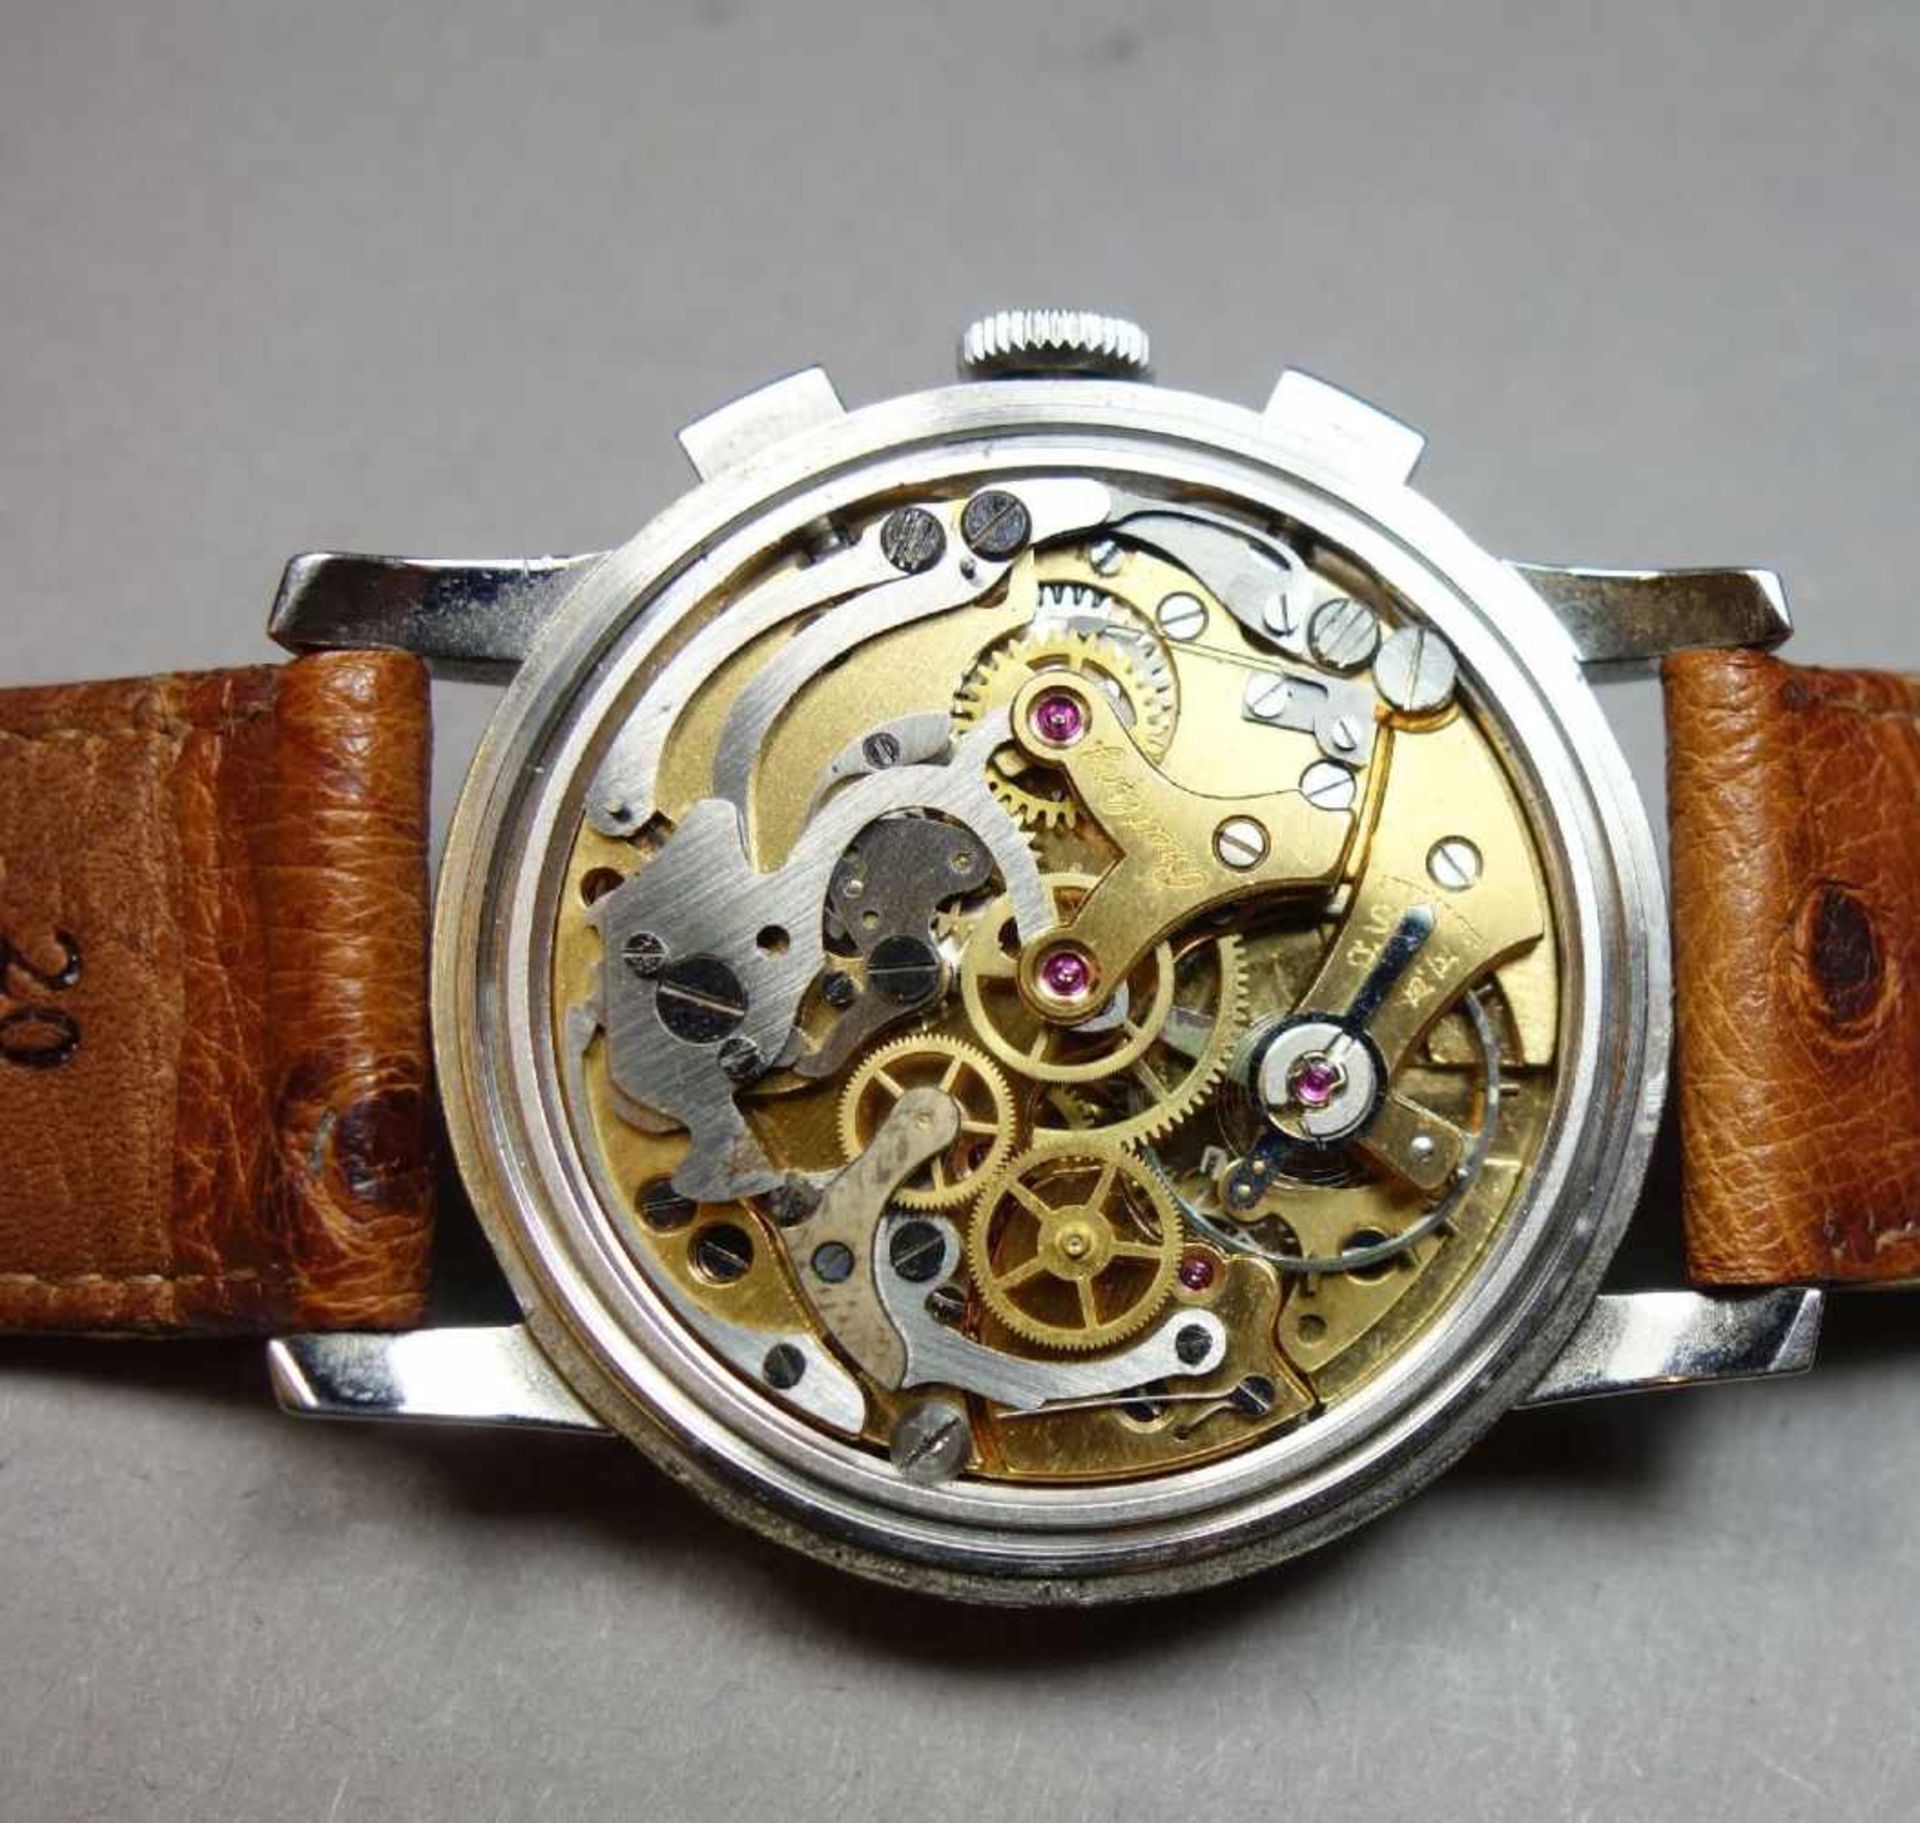 BREITLING VINTAGE ARMBANDUHR / CHRONOGRAPH MIT VOLLKALENDER / wristwatch, Handaufzug, Manufaktur - Image 9 of 10